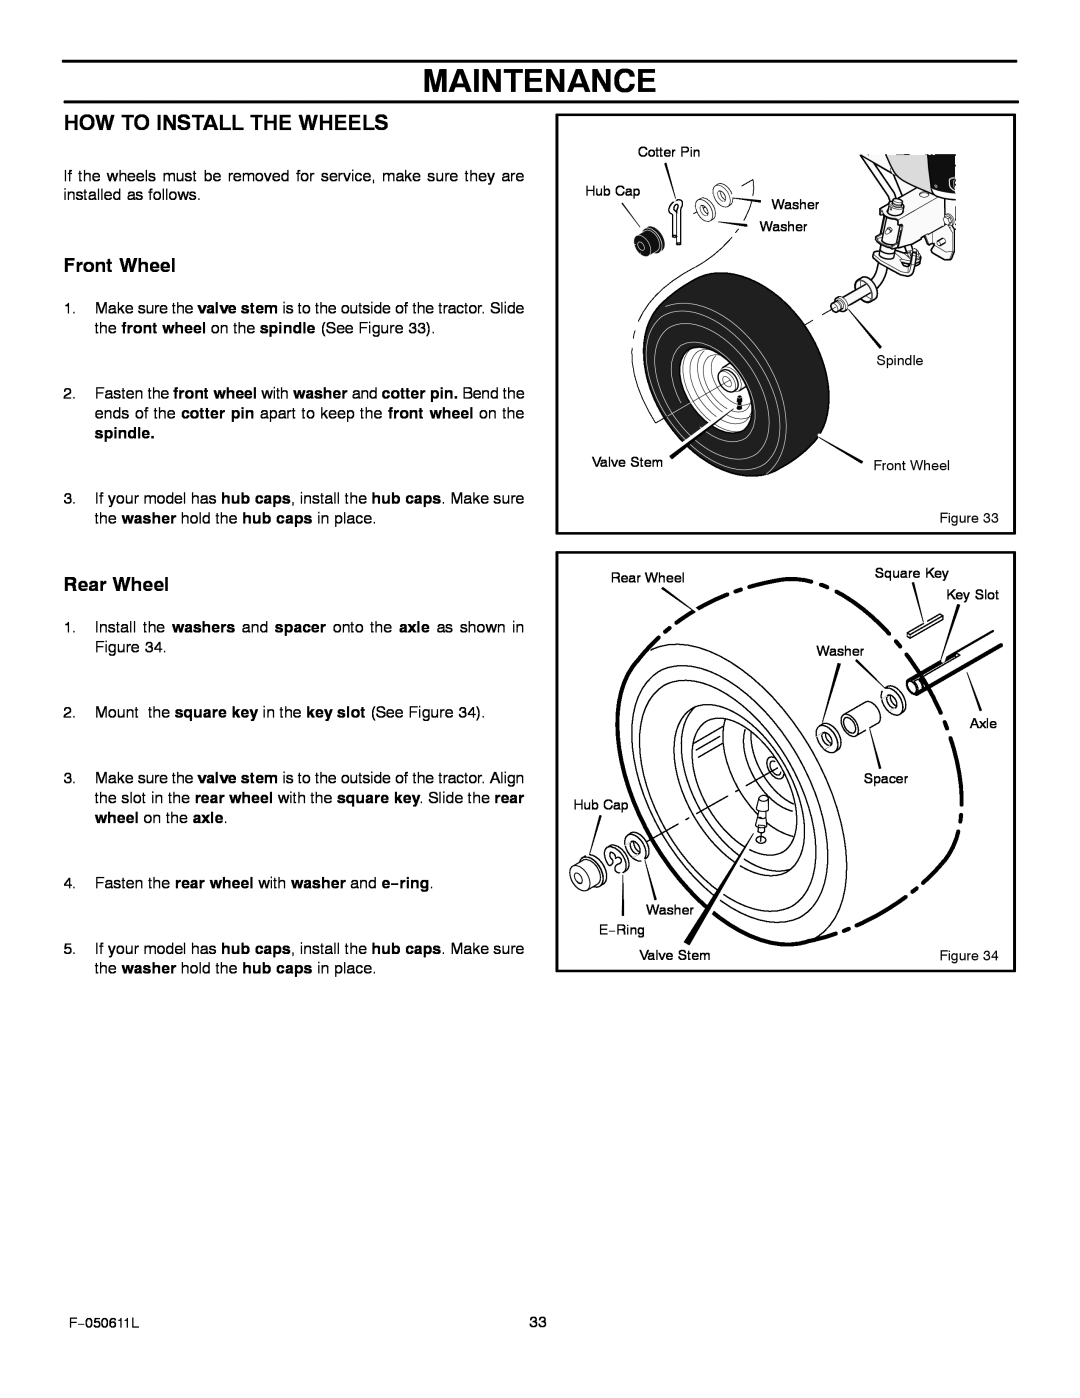 Murray 309007x8B manual How To Install The Wheels, Maintenance, Front Wheel, Rear Wheel 